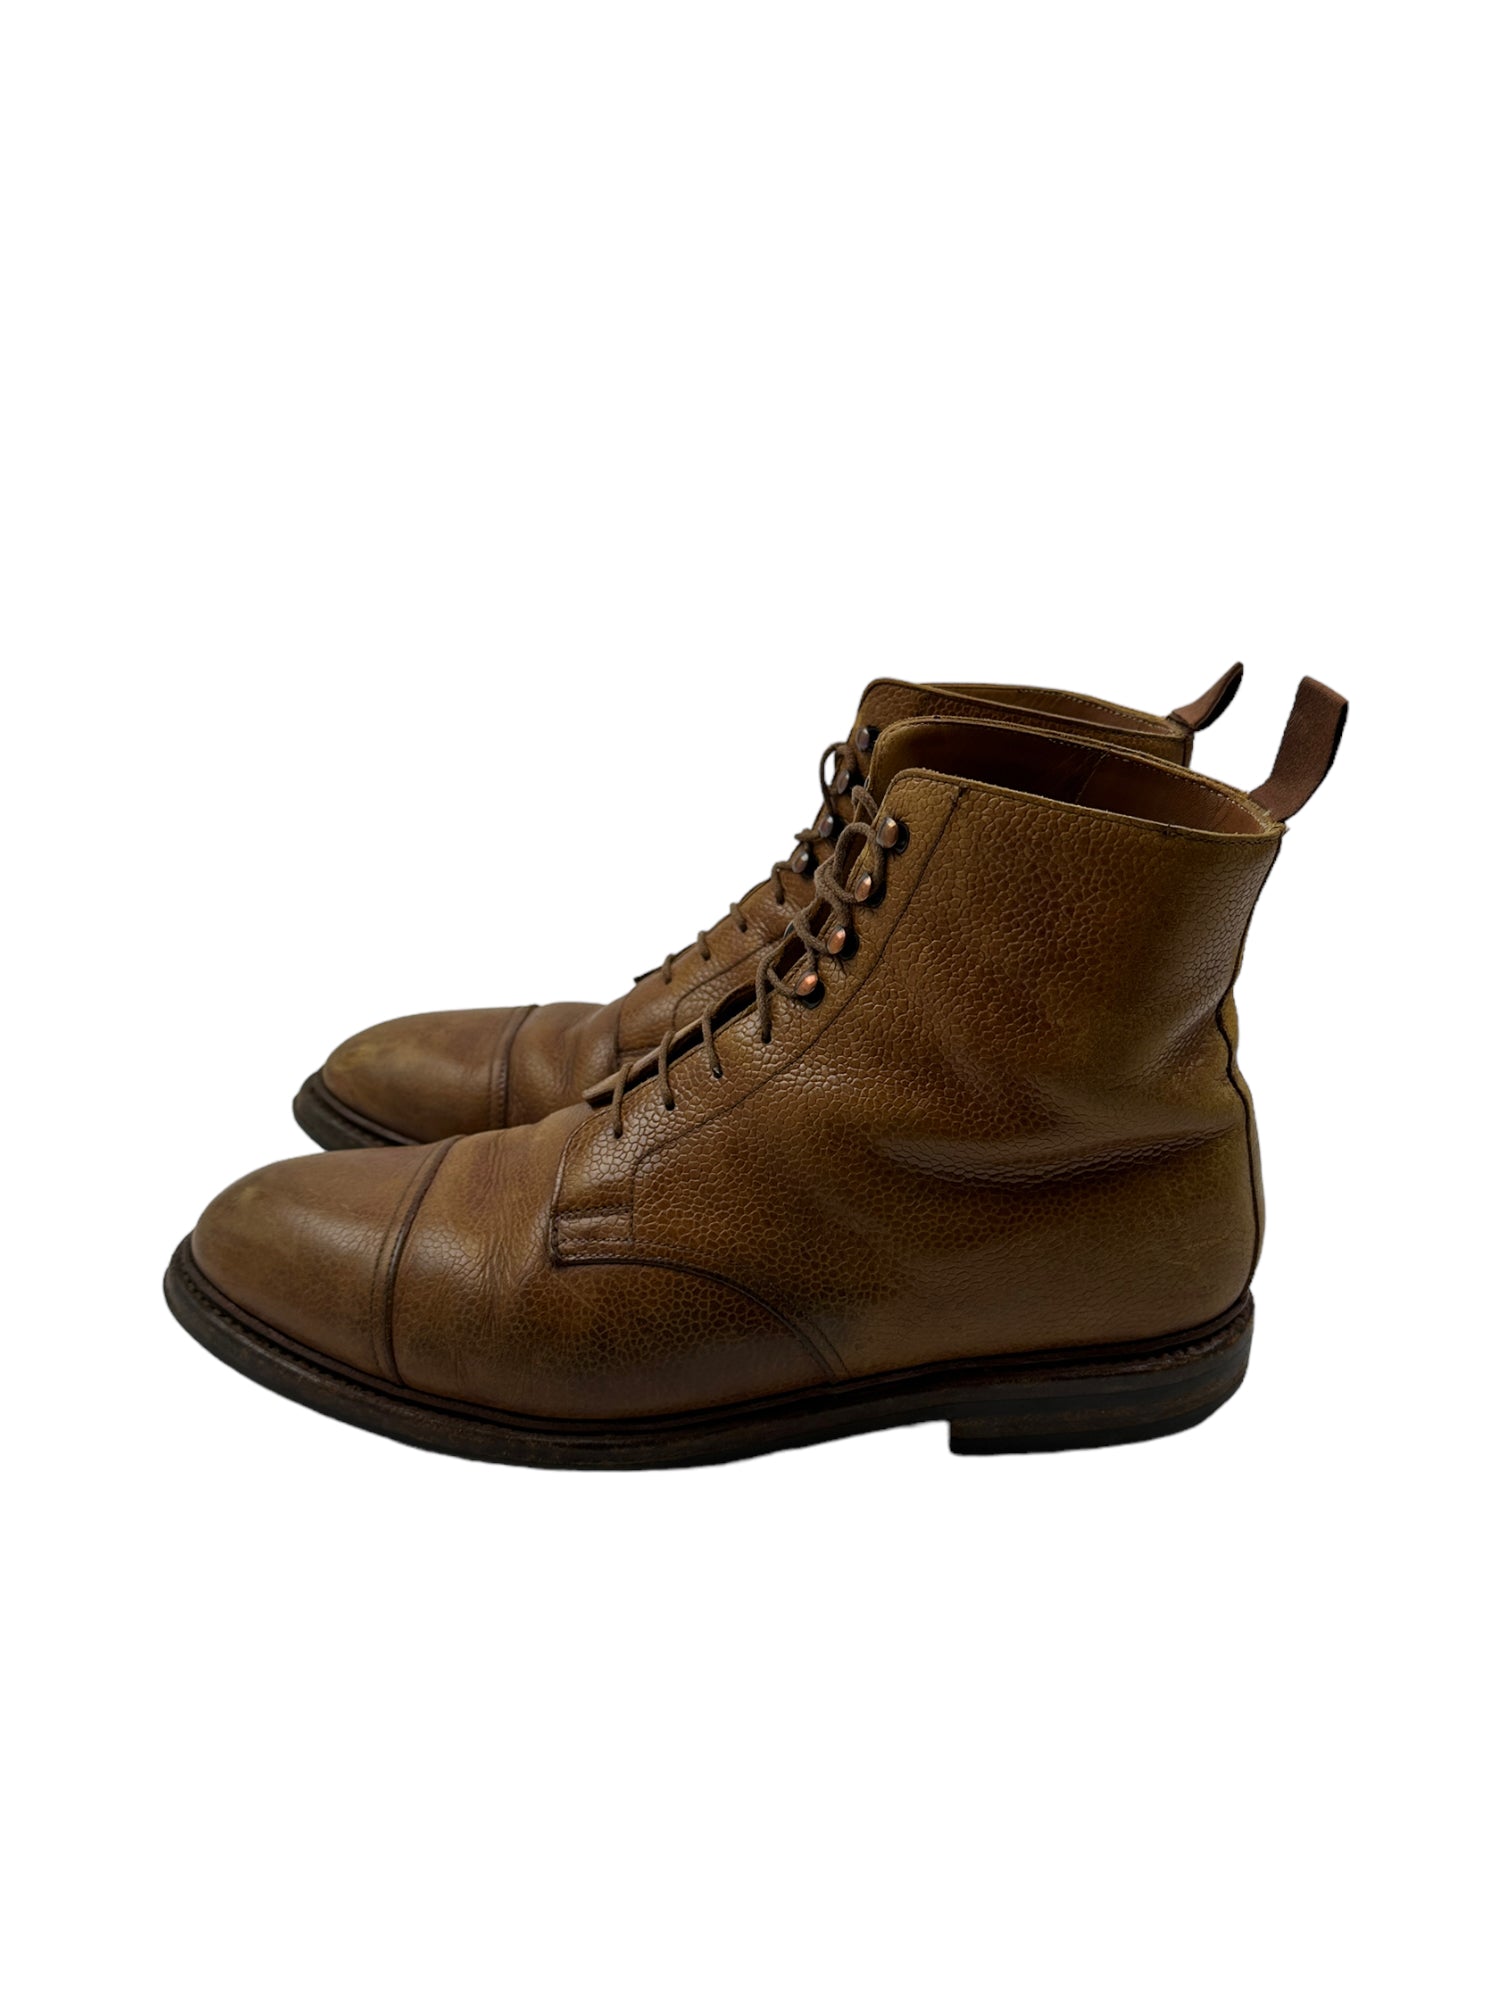 Crockett & Jones Tan Scotch Grain Coniston Boots